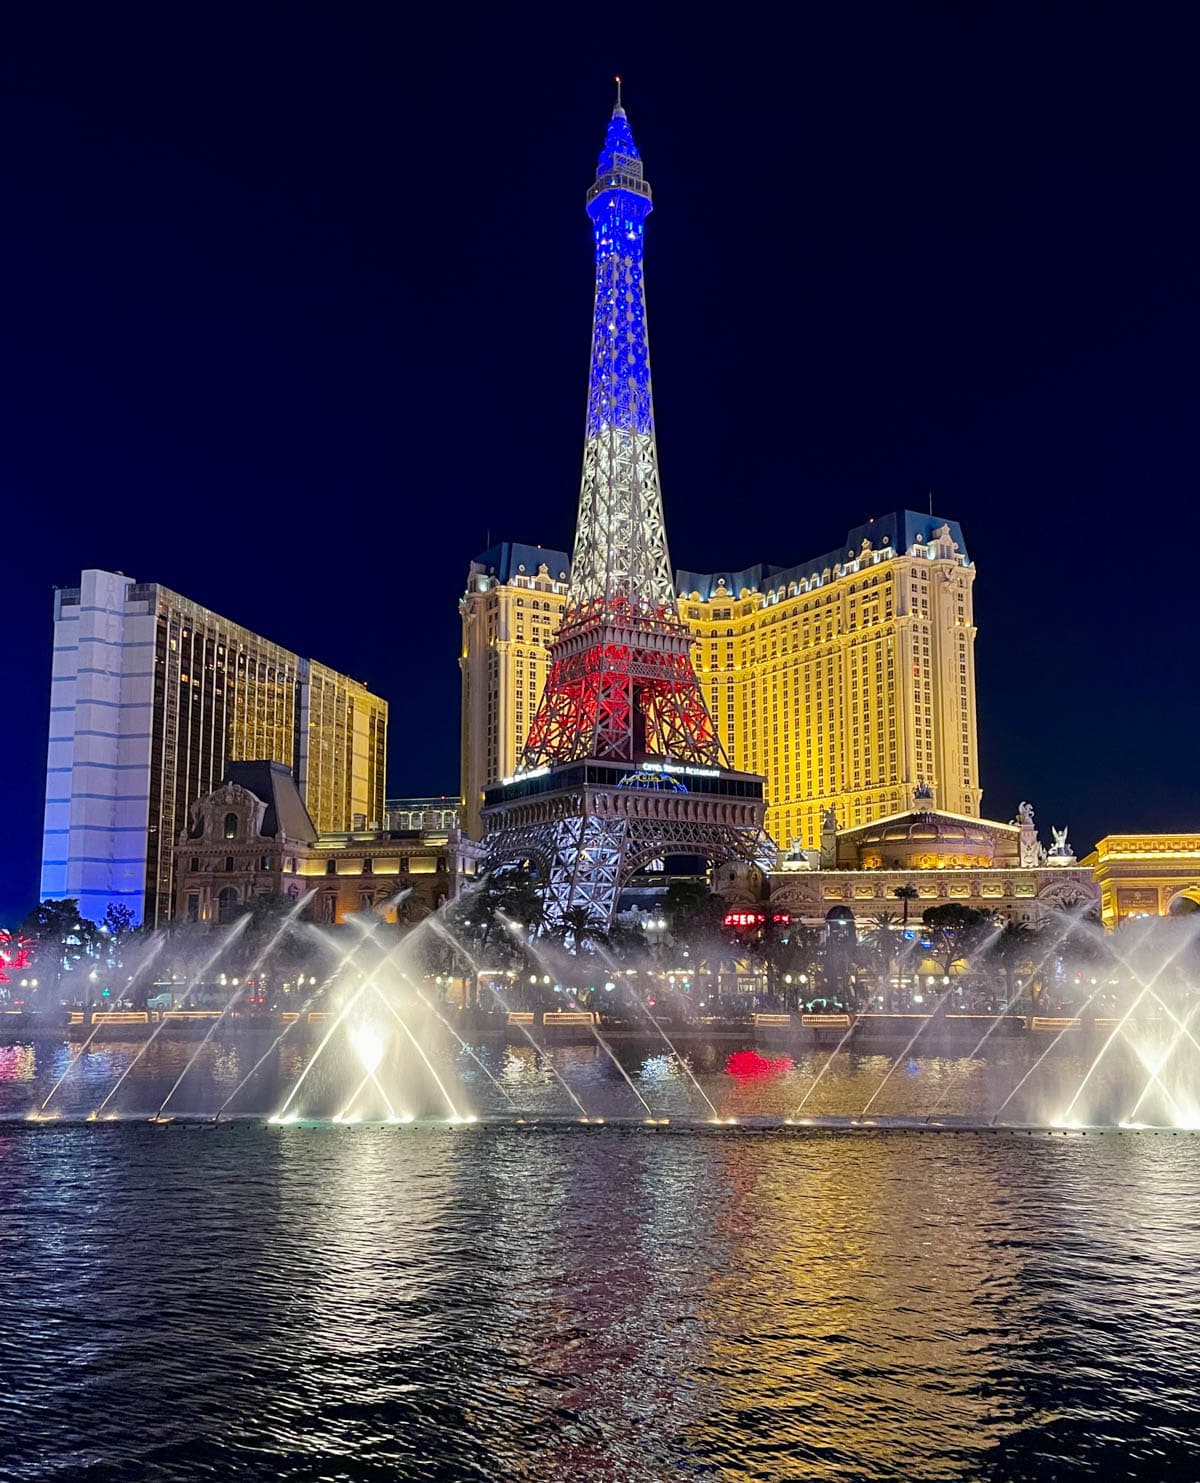 Bellagio Las Vegas fountain show at night.